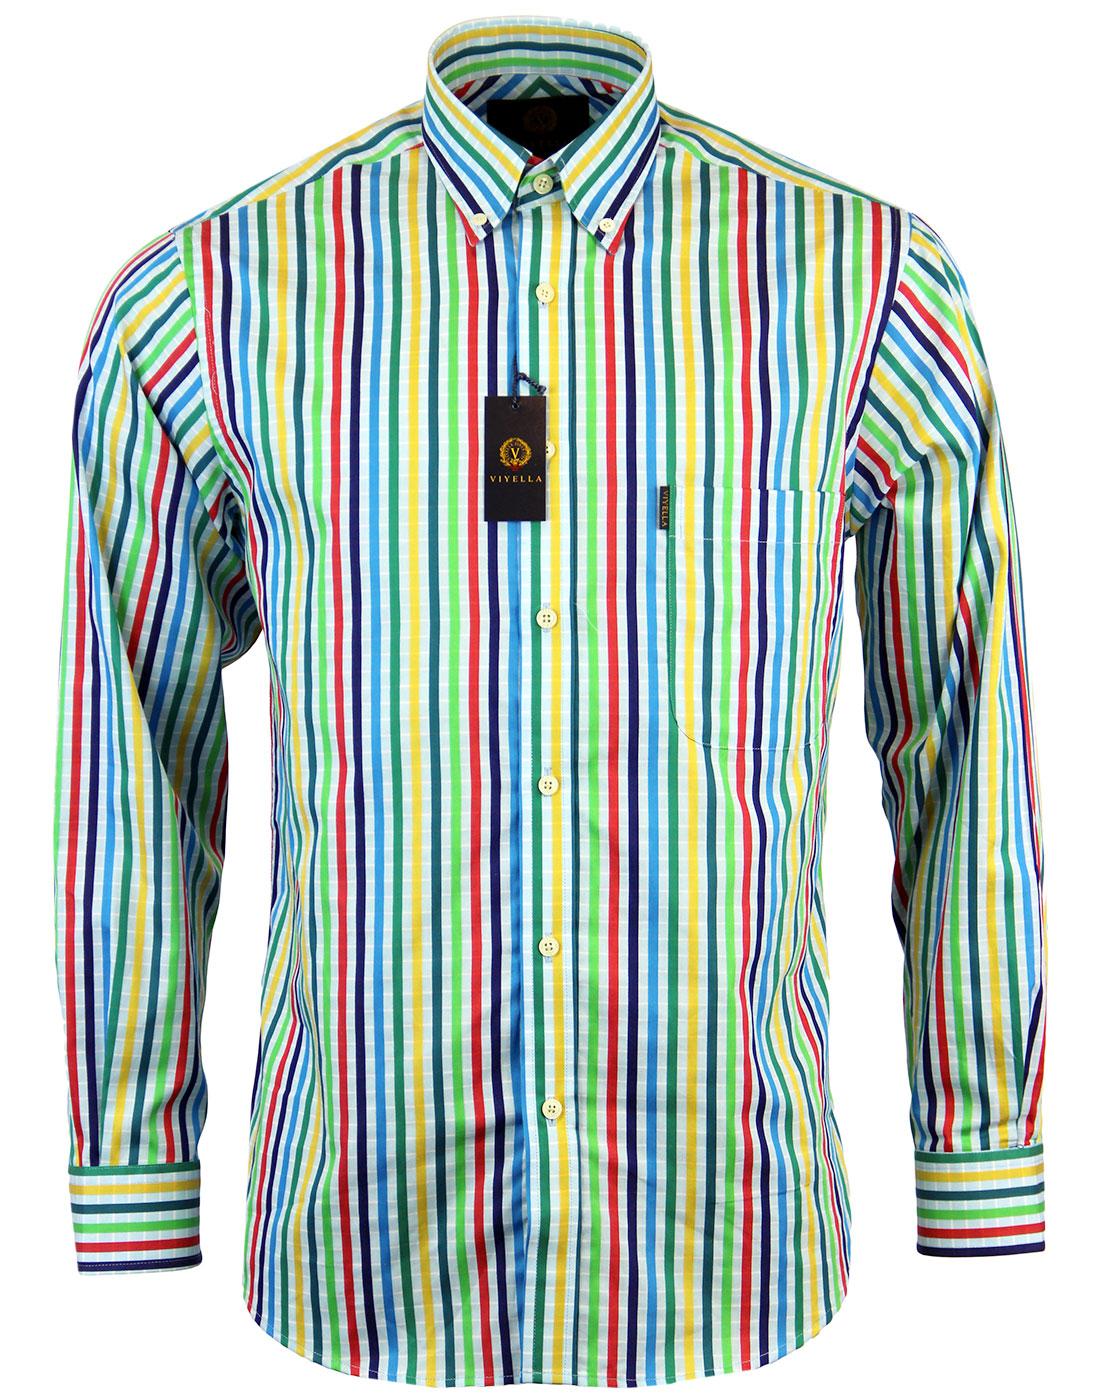 VIYELLA Retro 1960s Mod Multi Stripe Check Shirt